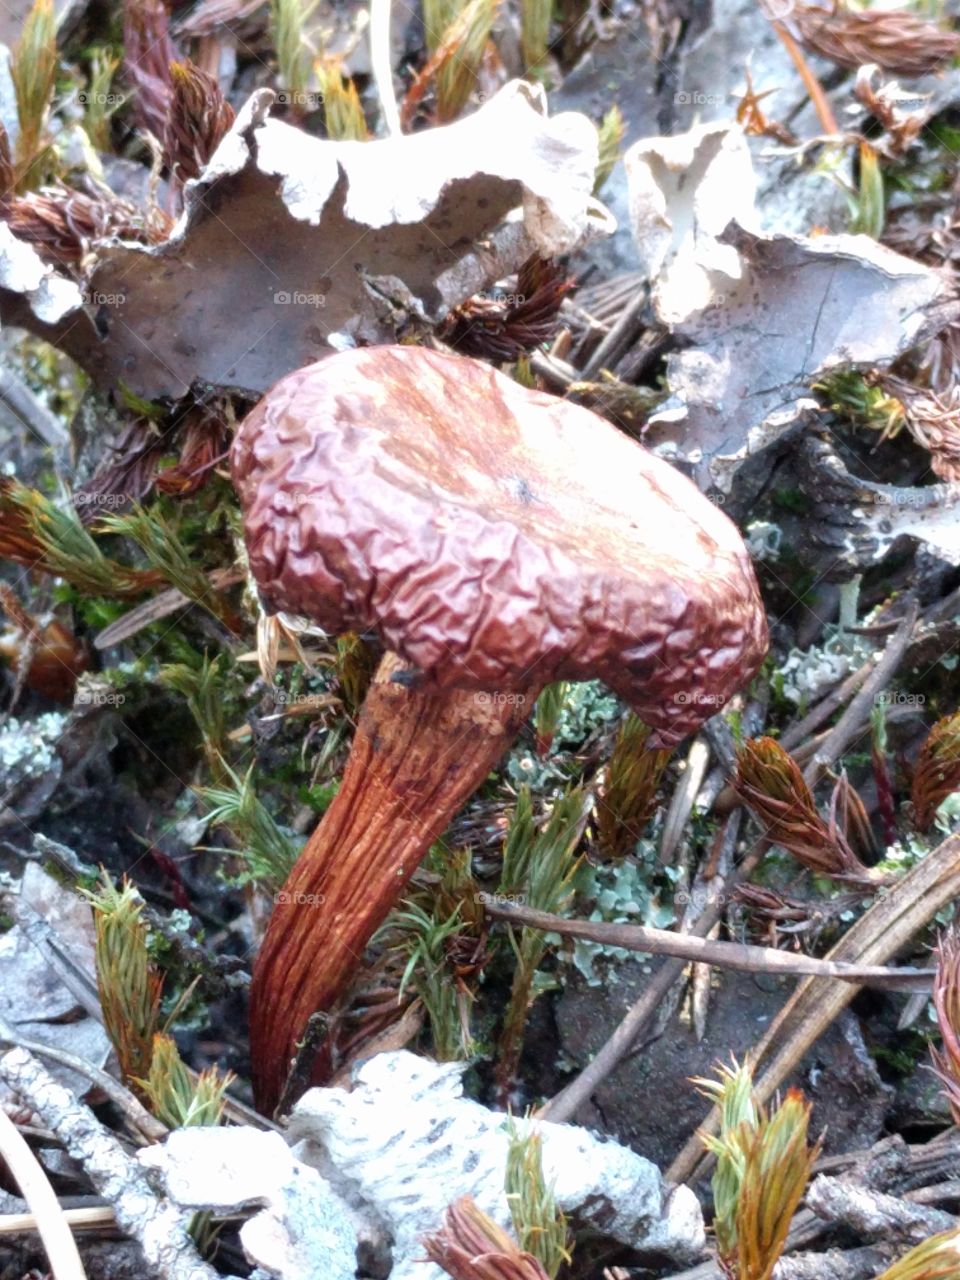 dried out mushroom